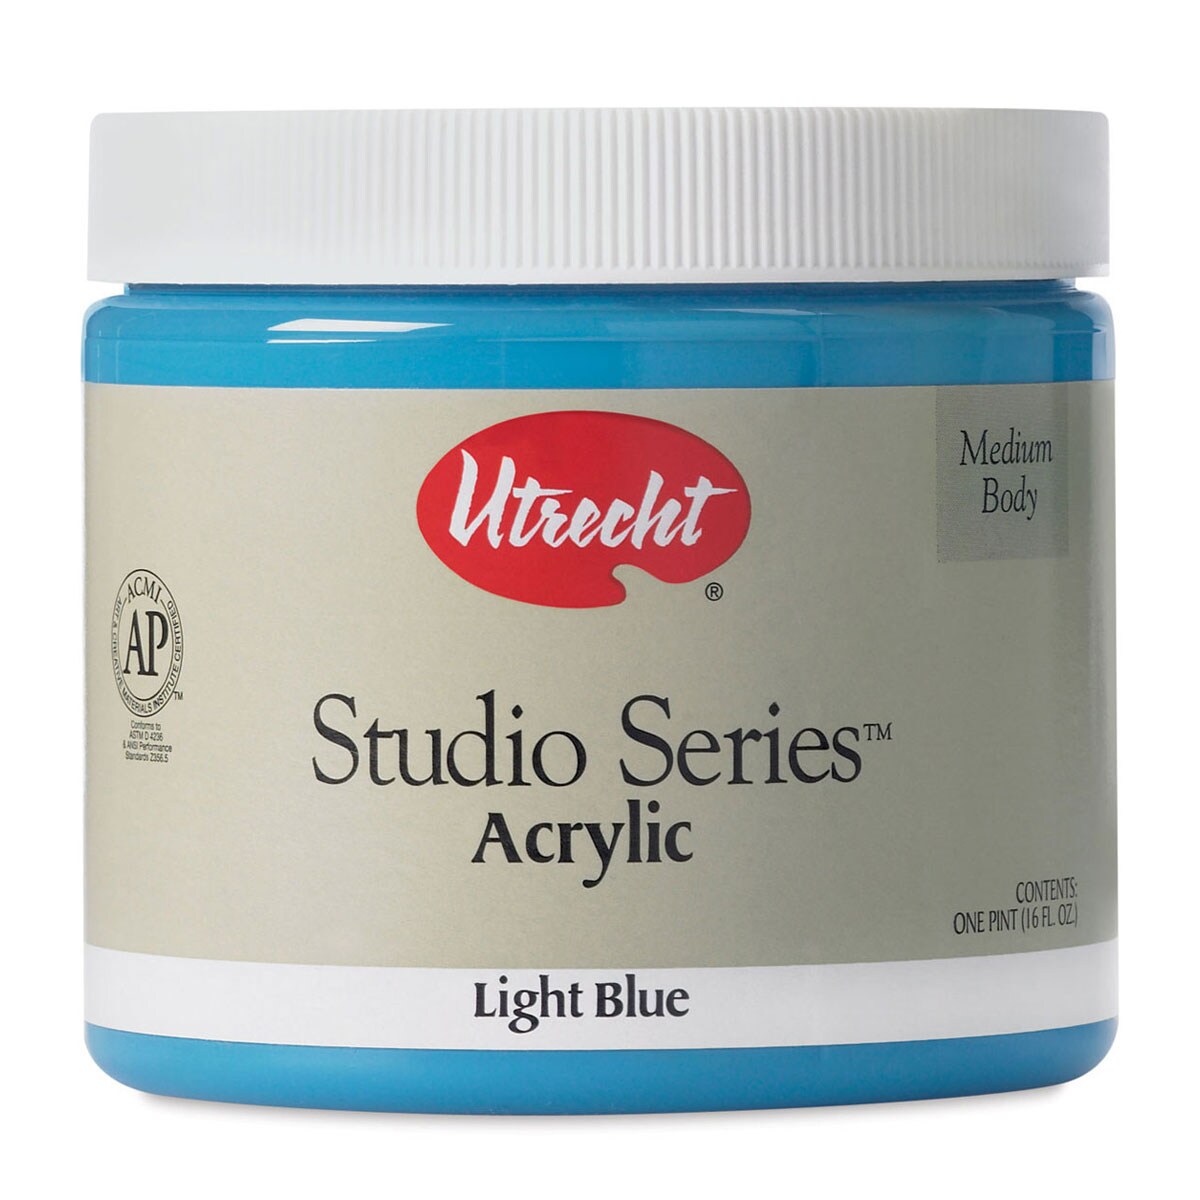 Utrecht Studio Series Acrylic Paint - Light Blue, Pint - Colors